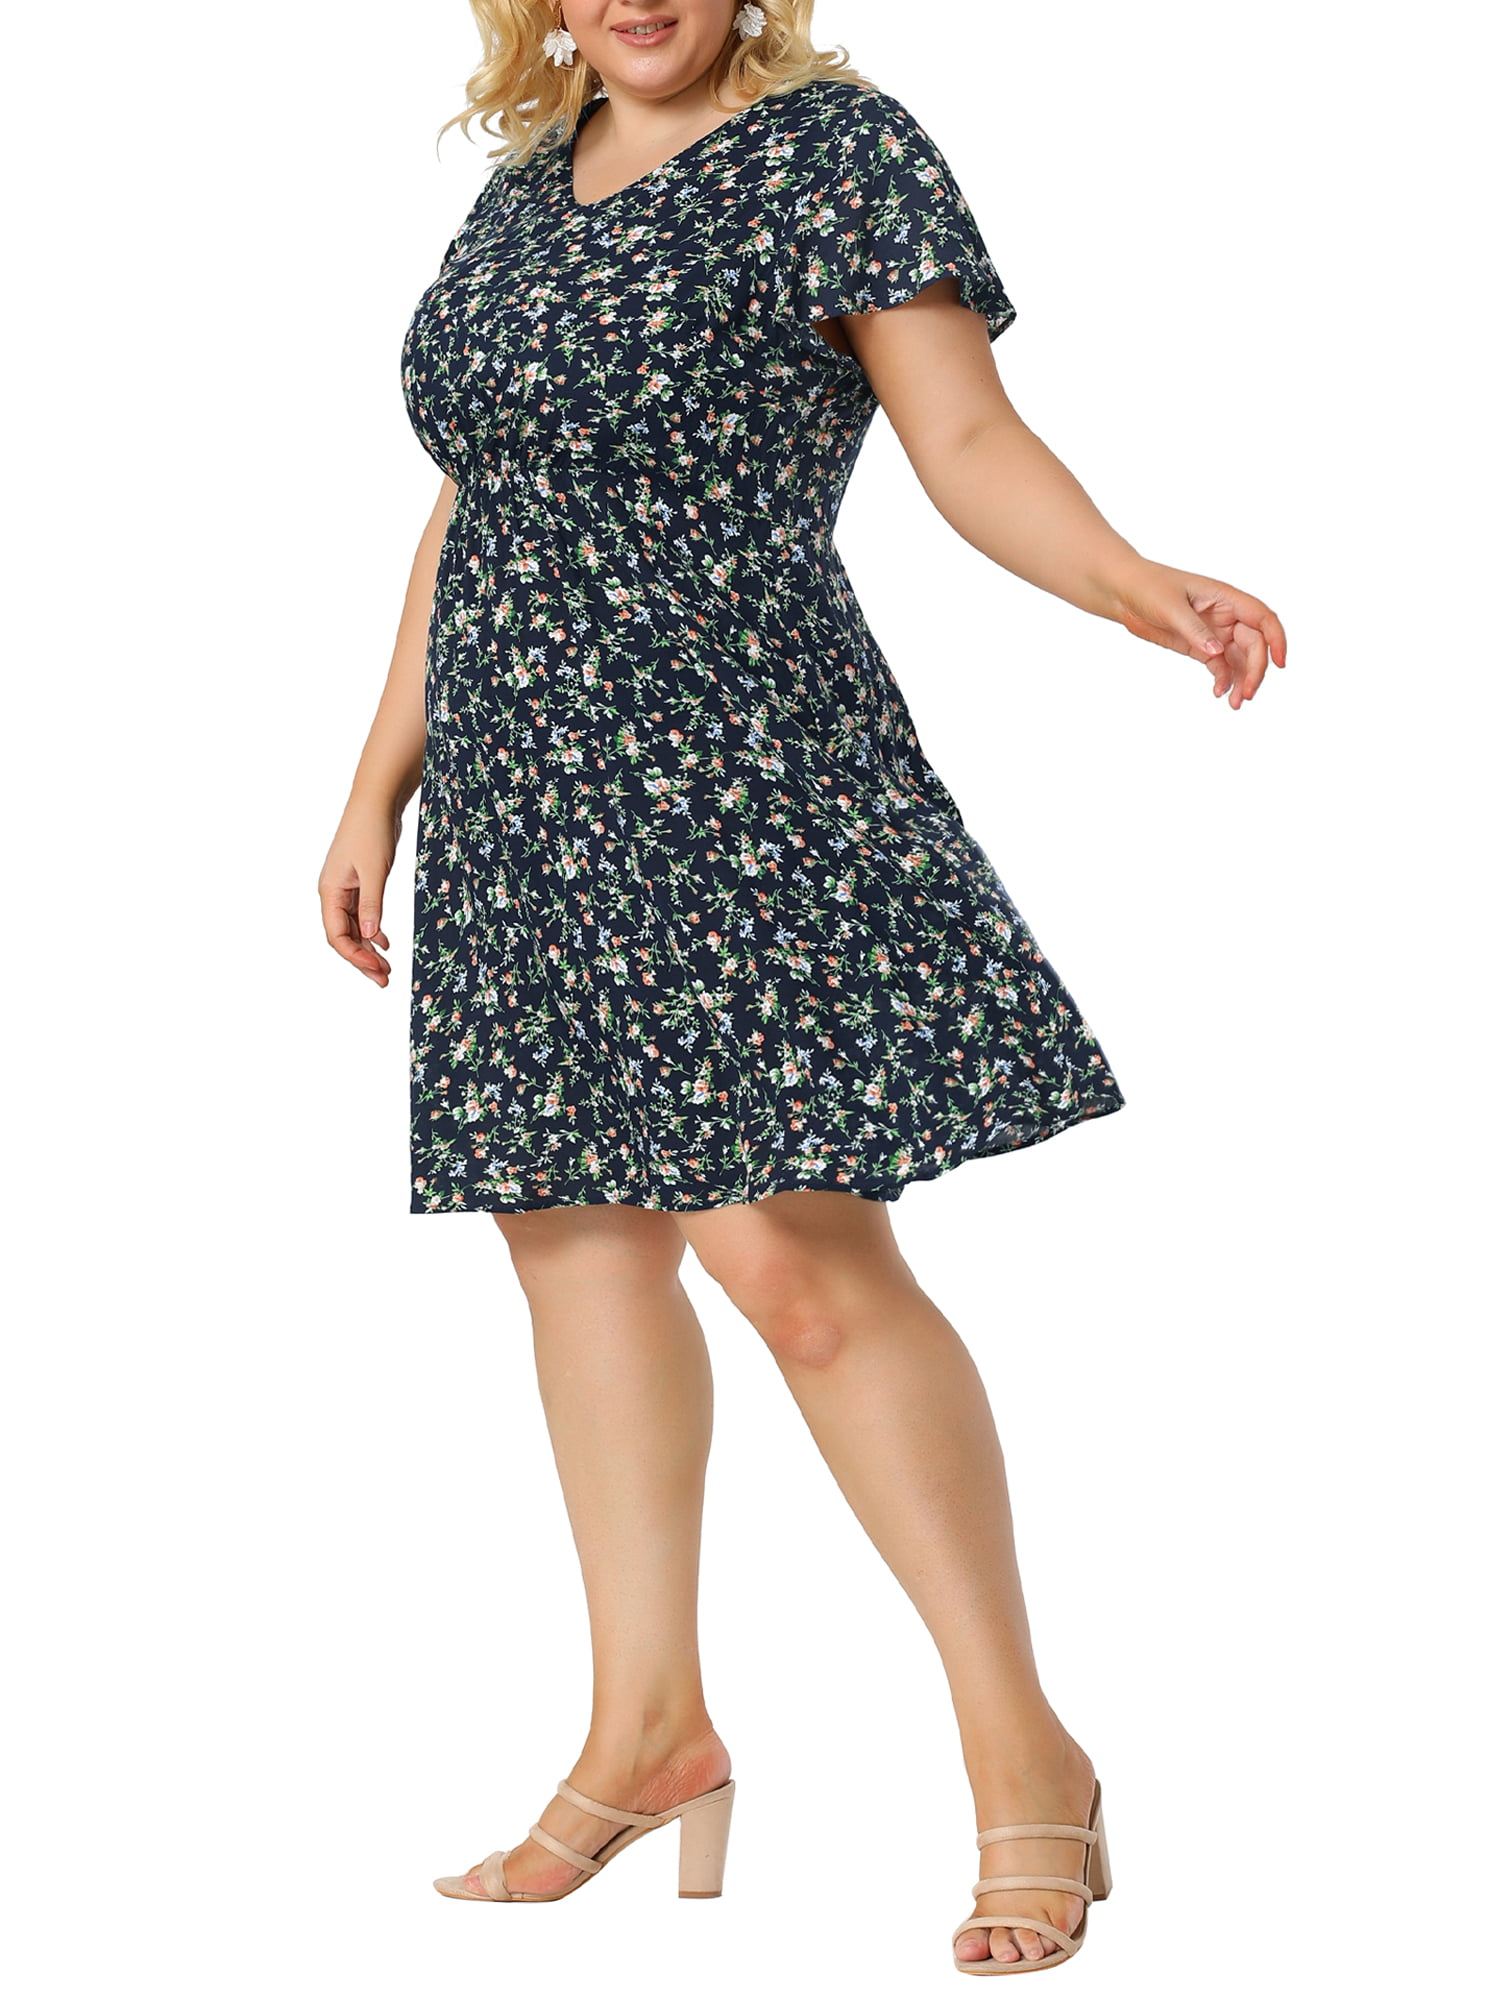 Plus Size Peplum Floral Dress - Navy - ShopperBoard